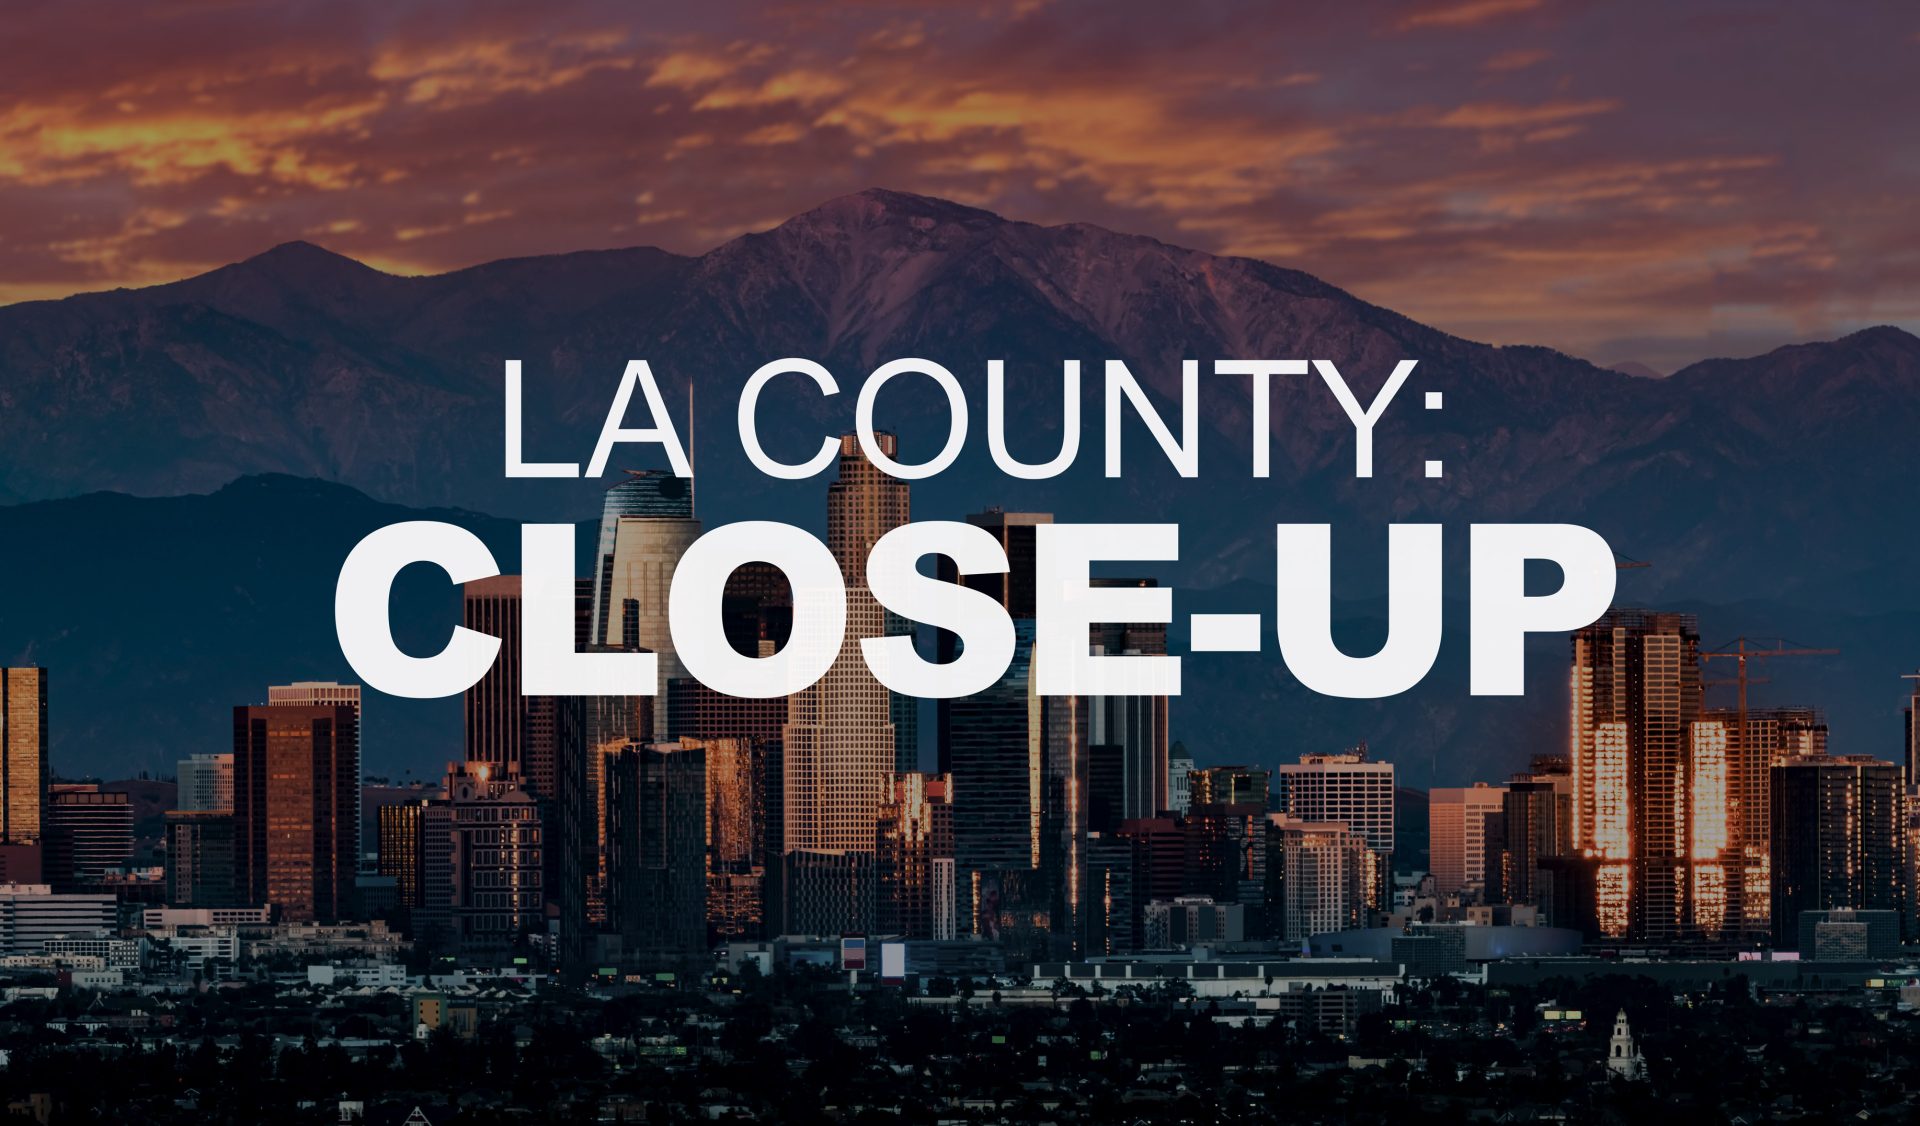 LA County Closeup